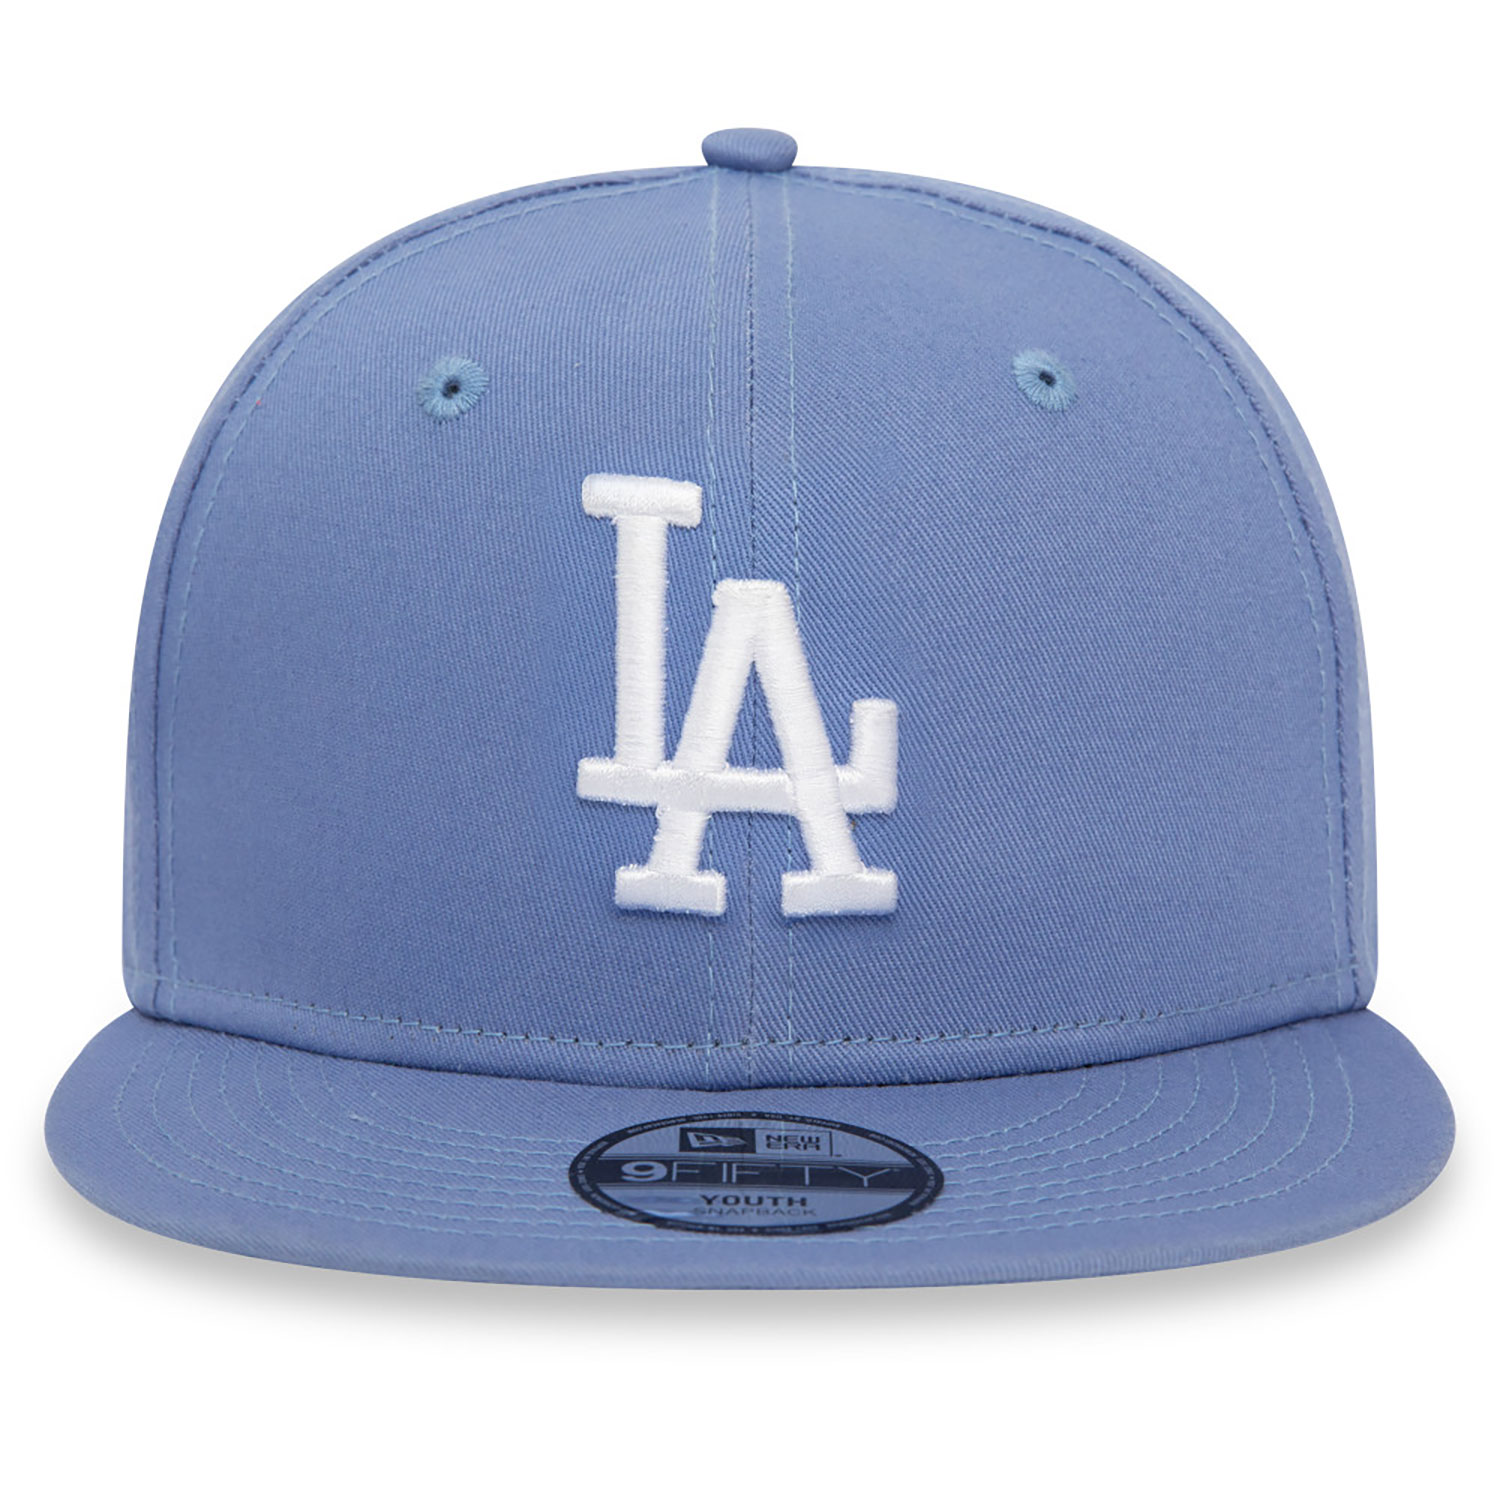 LA Dodgers Youth League Essential Blue 9FIFTY Adjustable Cap